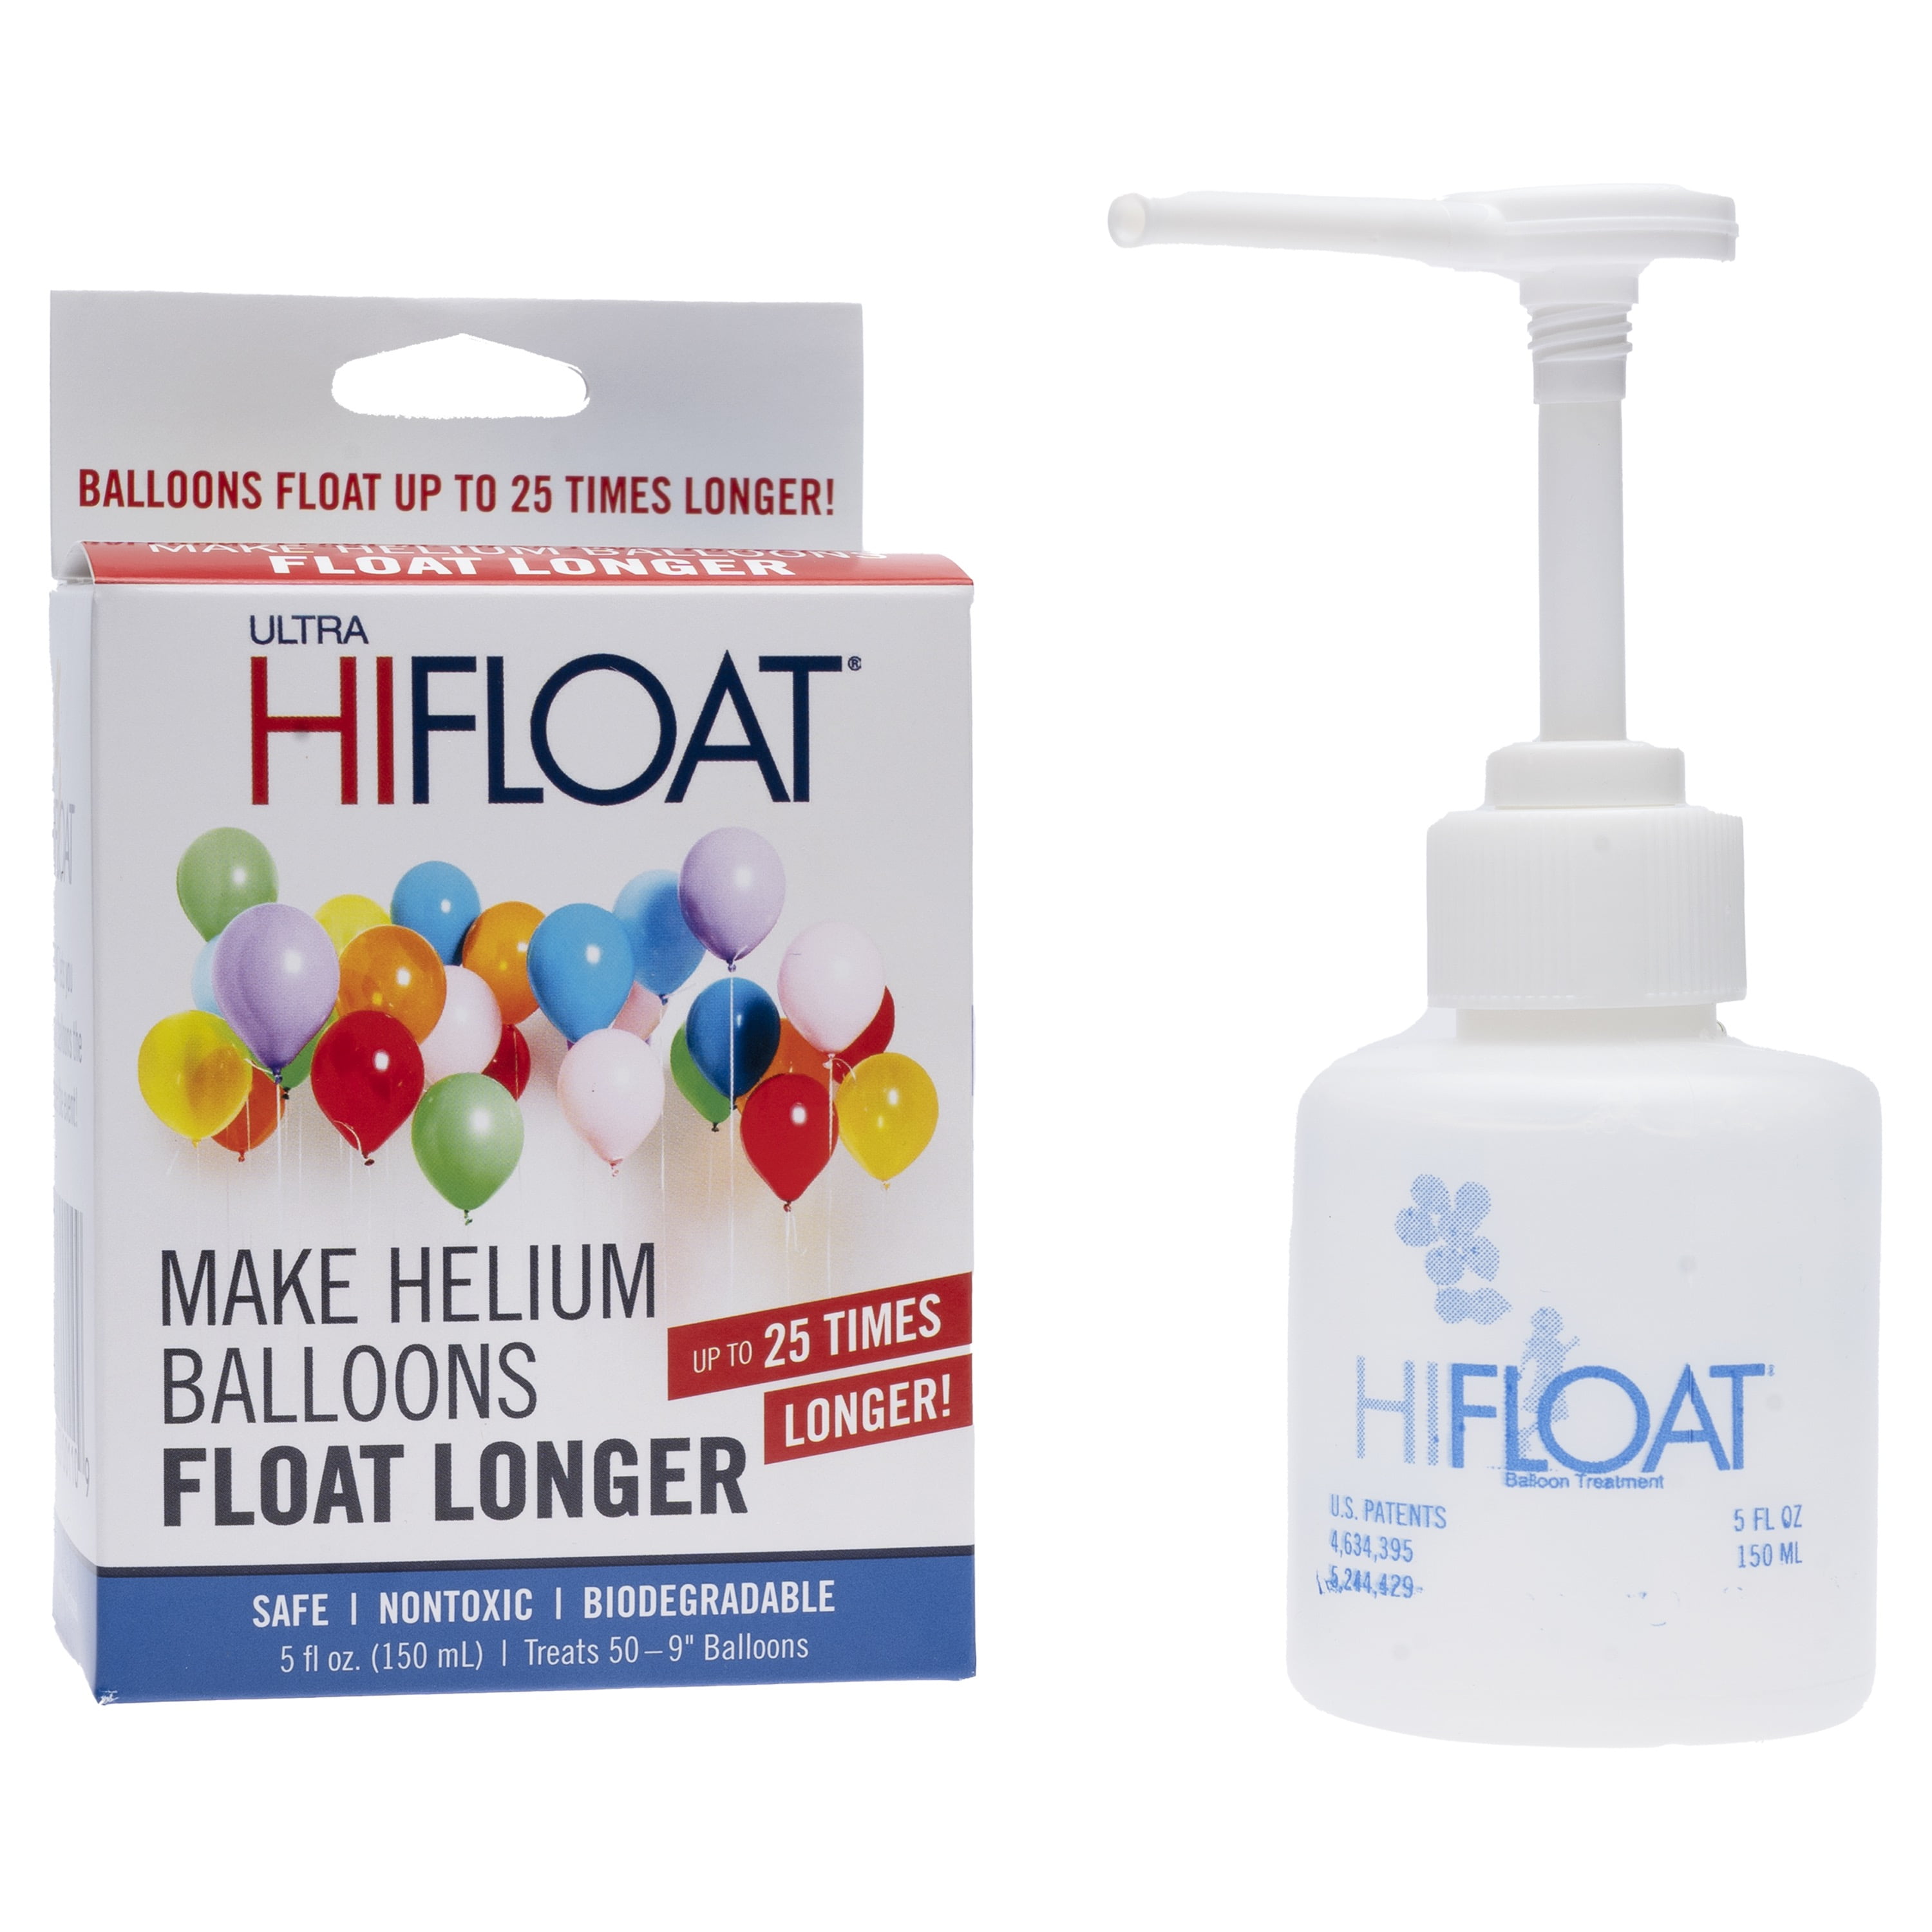 HI-FLOAT Balloon Treatment (@hifloat) • Instagram photos and videos